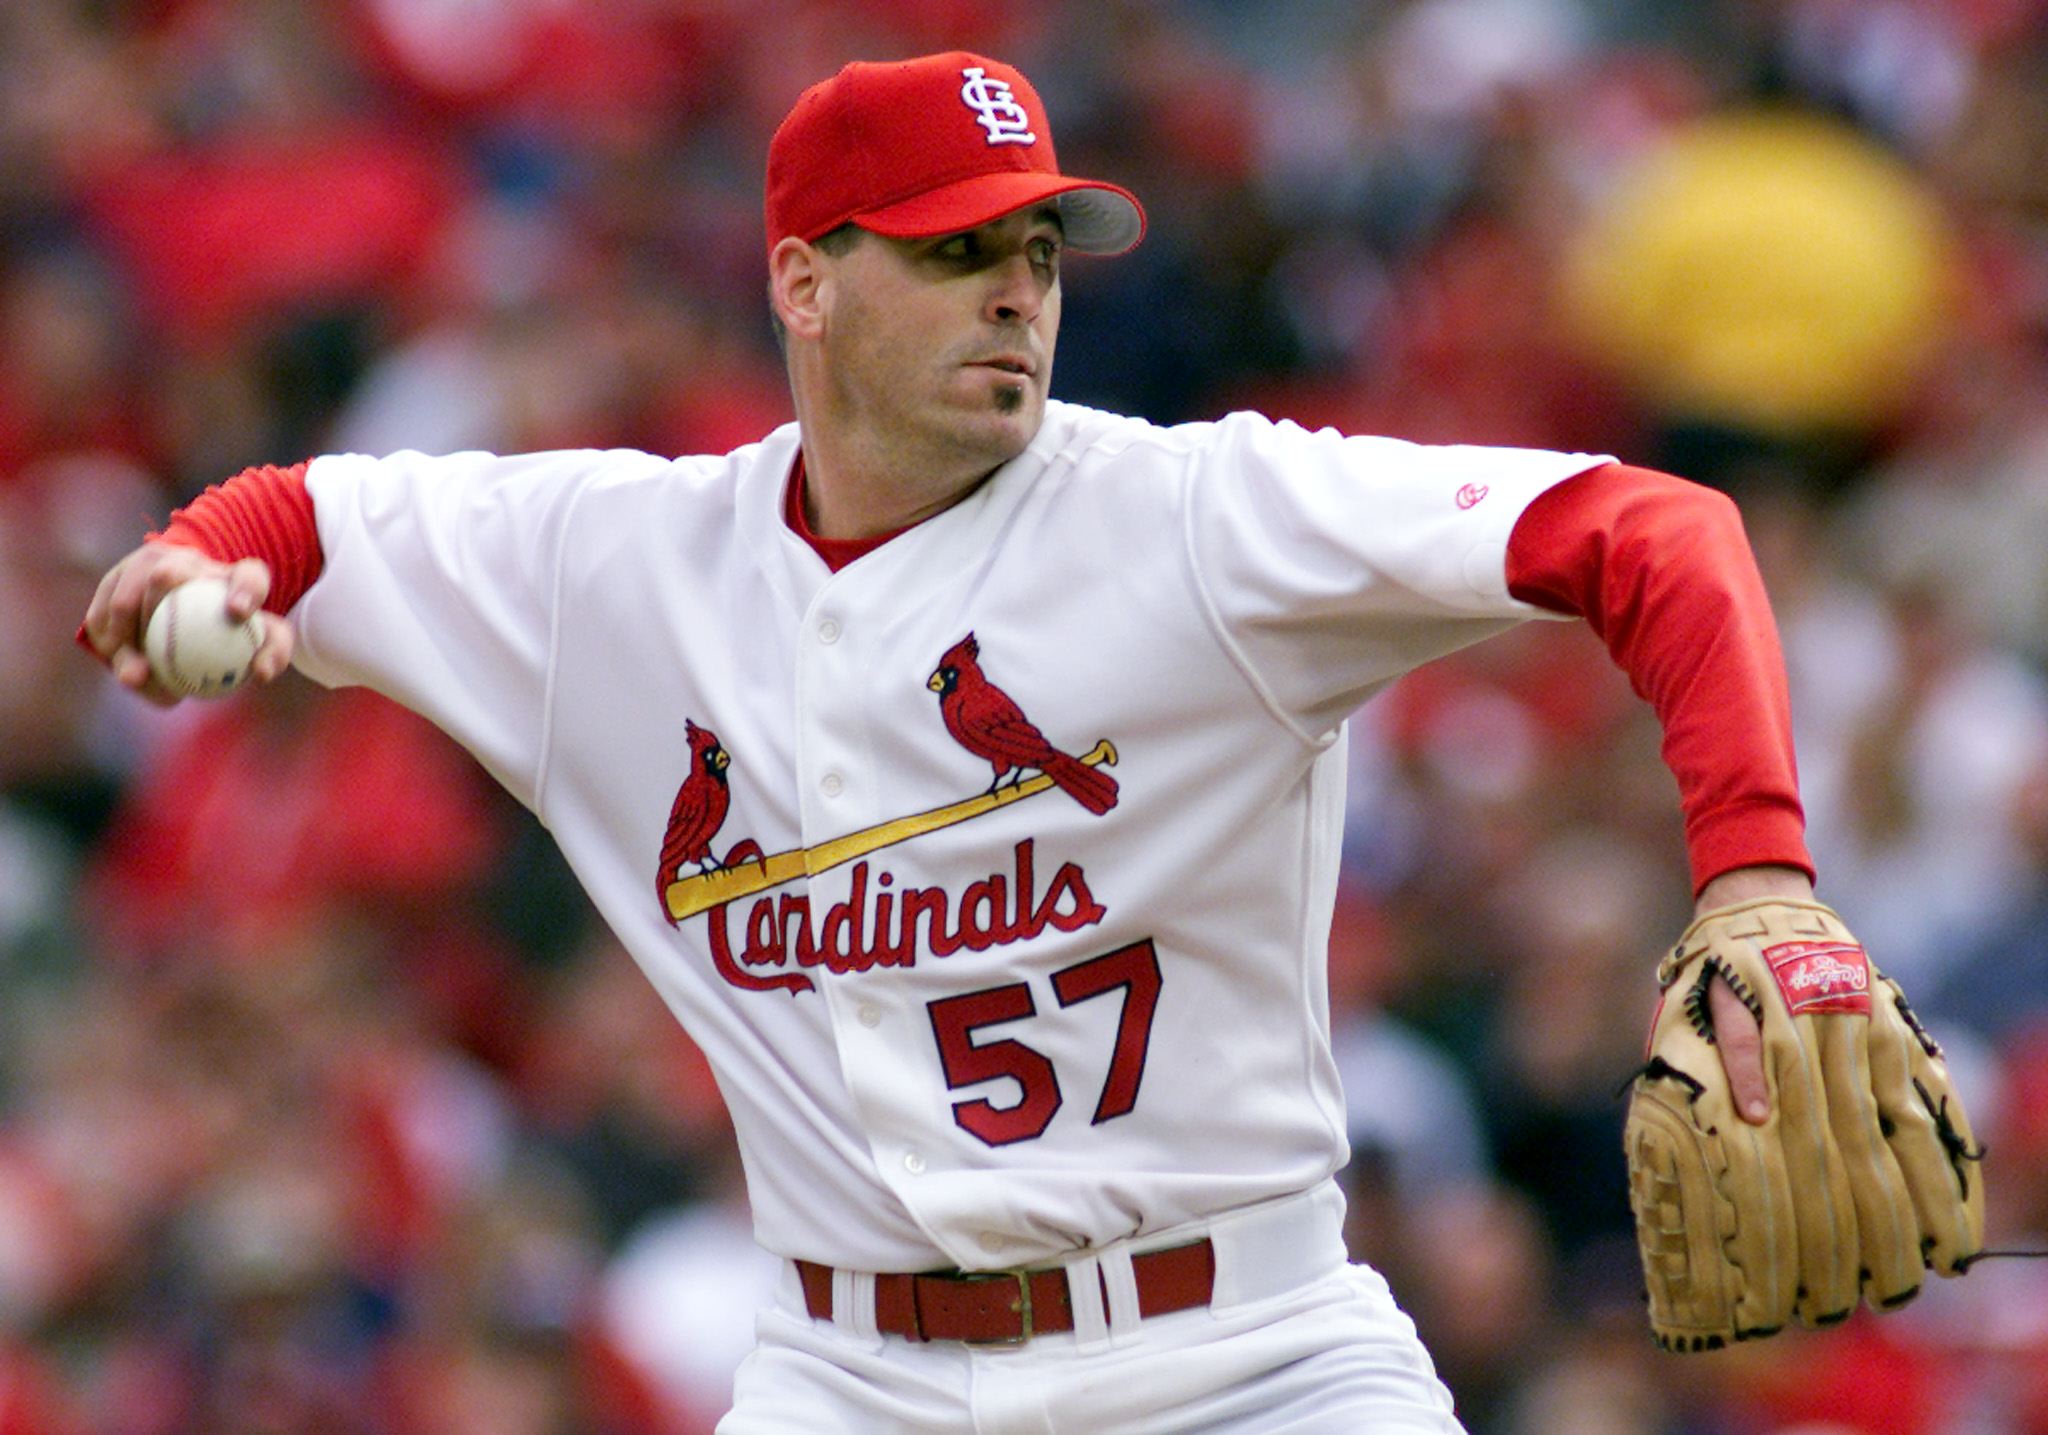 The Tragic Death of Cardinals Pitcher Darryl Kile Stunned the Baseball ...